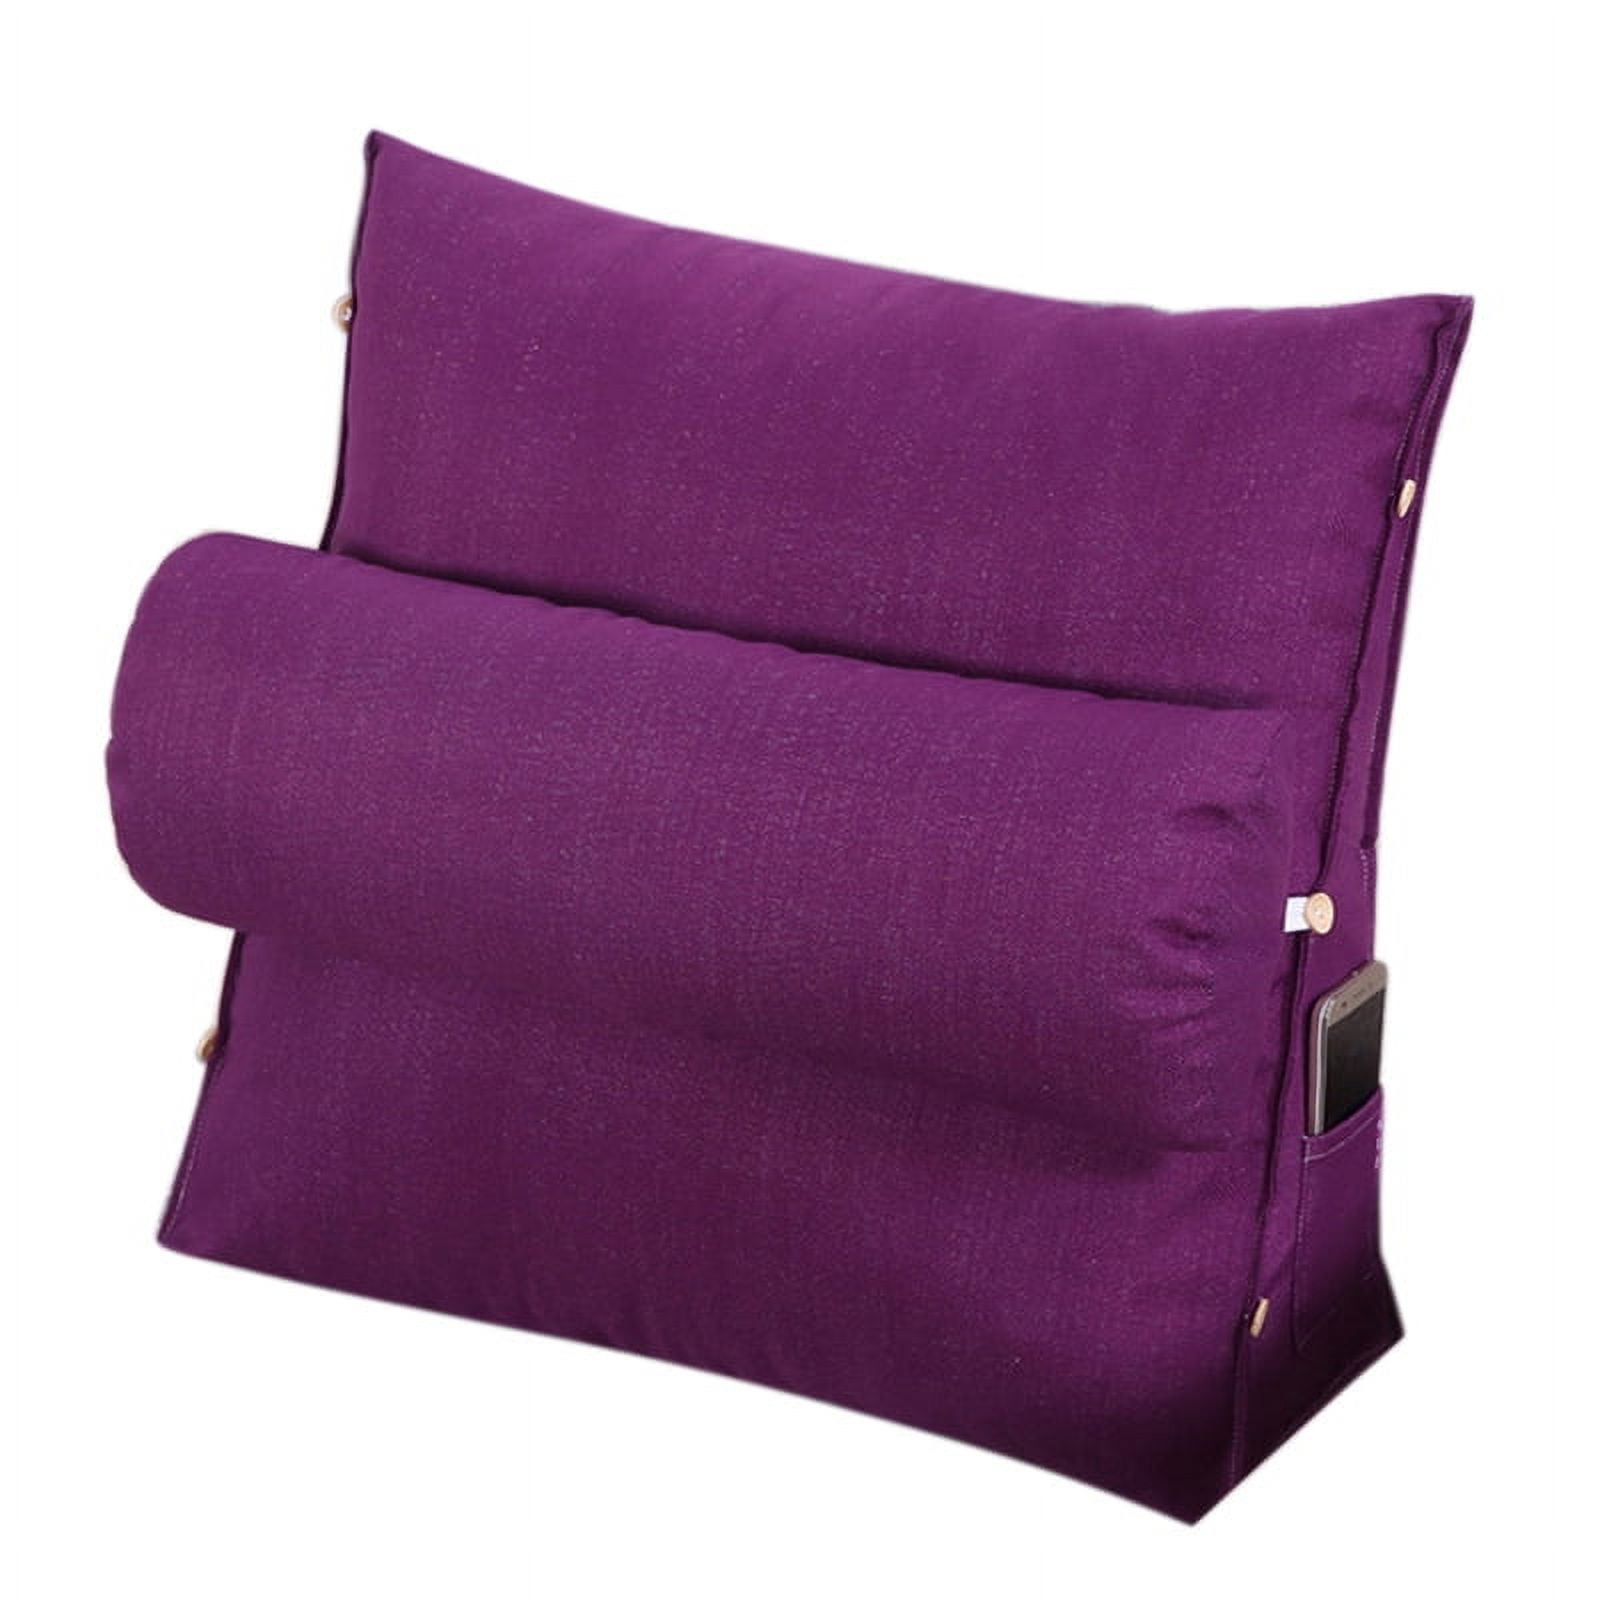 Cushy Form Knee Pillow for Side Sleepers – Geoffs Club